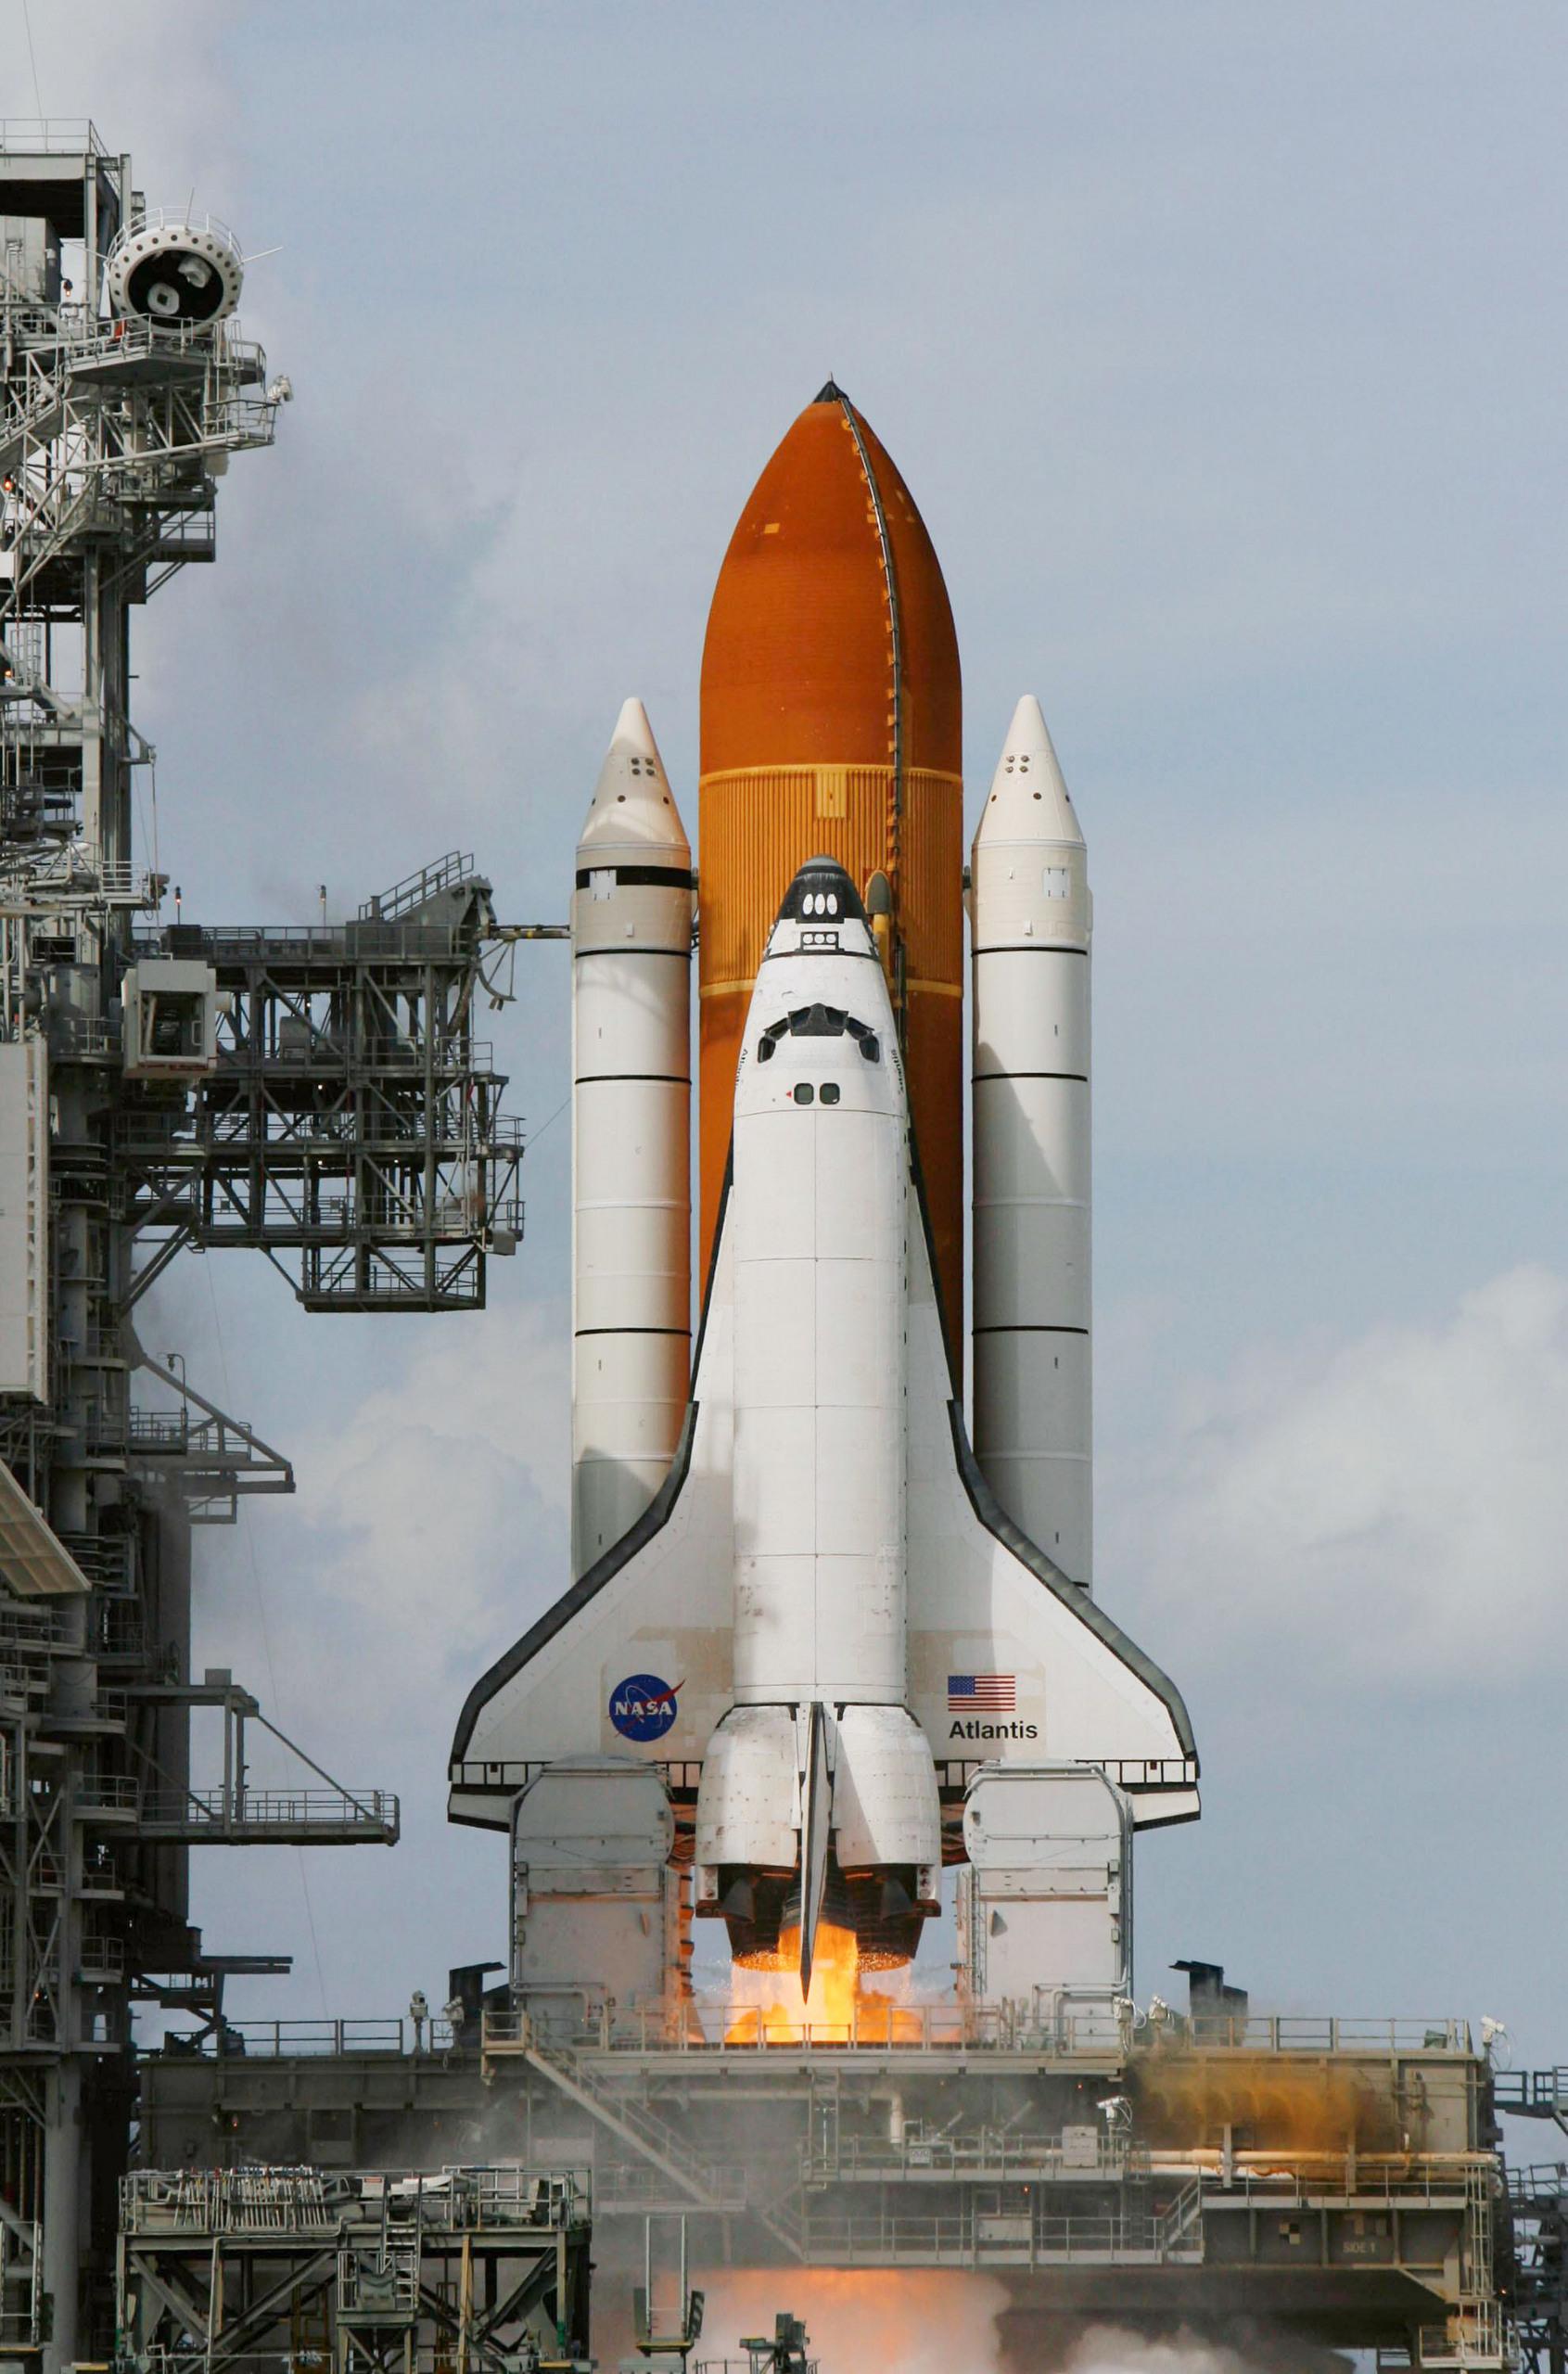 NASA image NASA Space Shuttle Lot HD wallpaper and background